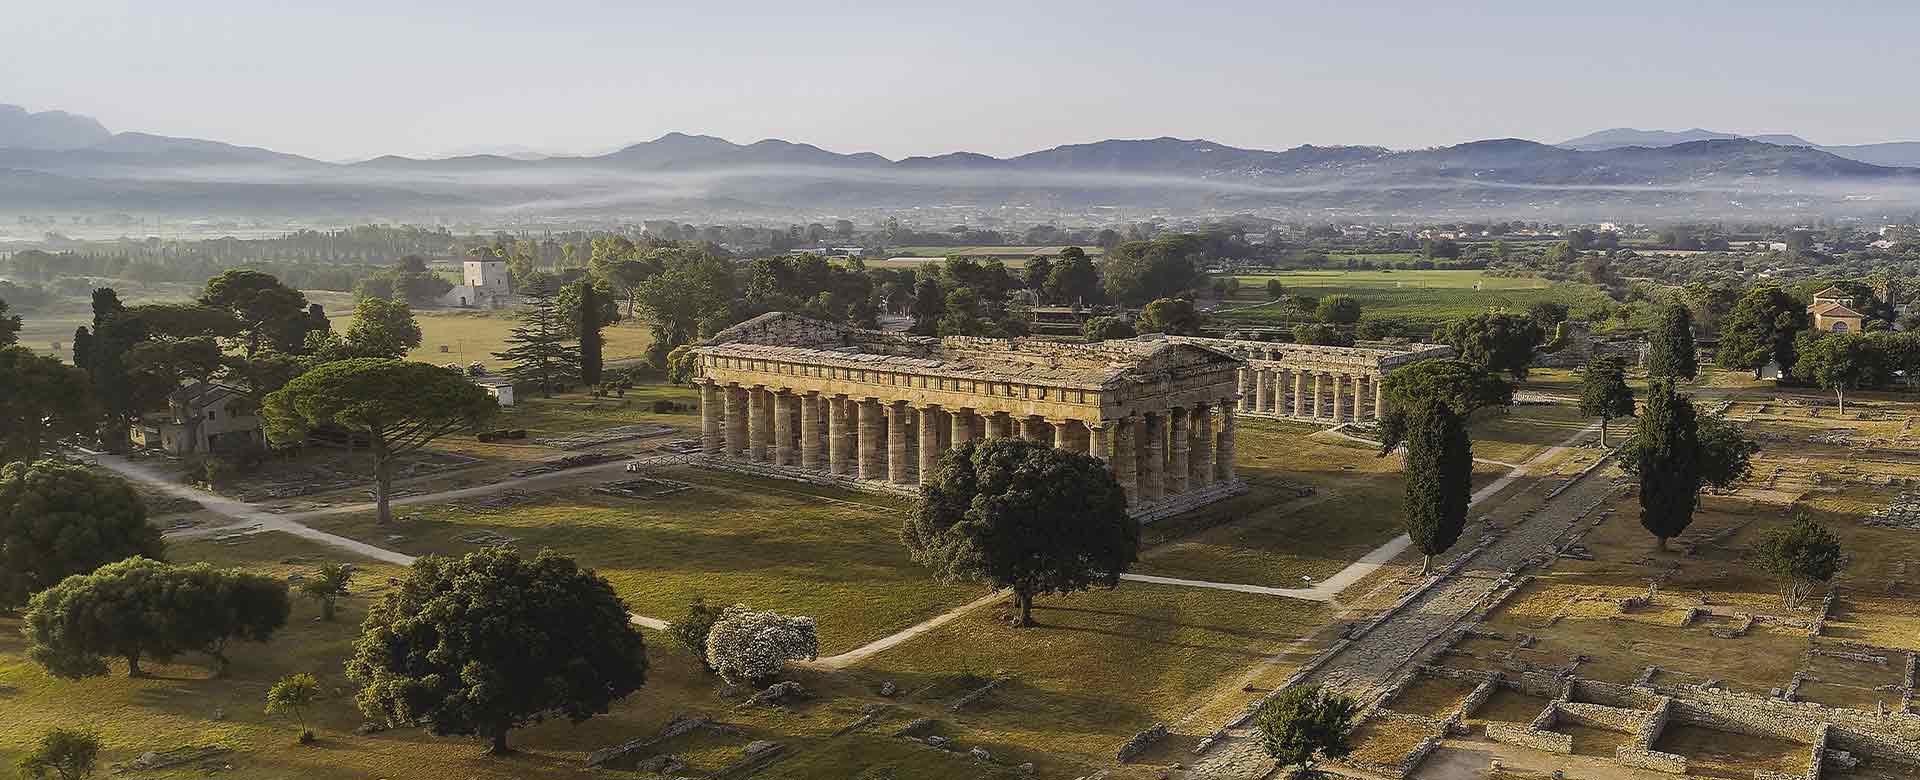 Parco archeologico di Paestum (SA)